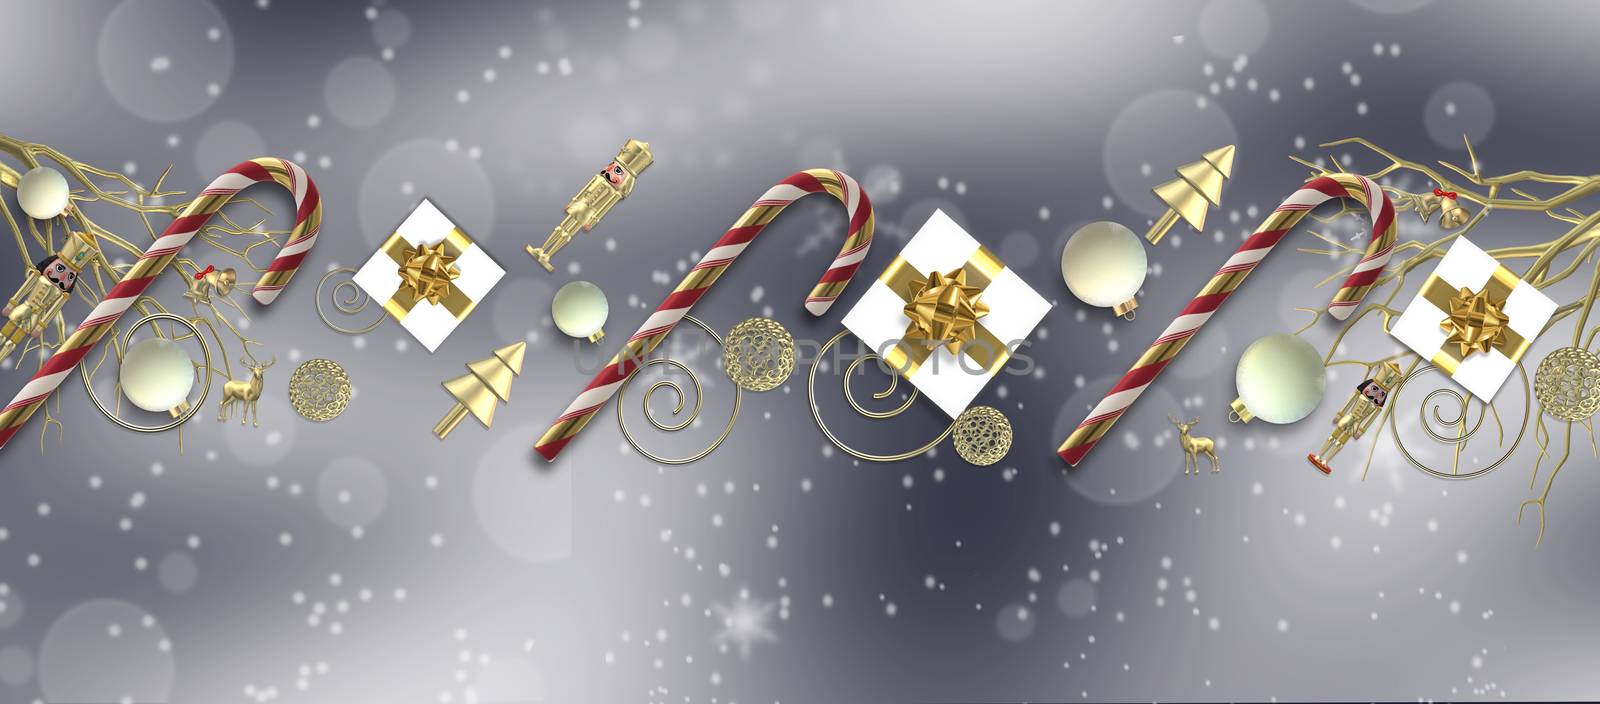 Xmas symbols for holiday card by NelliPolk